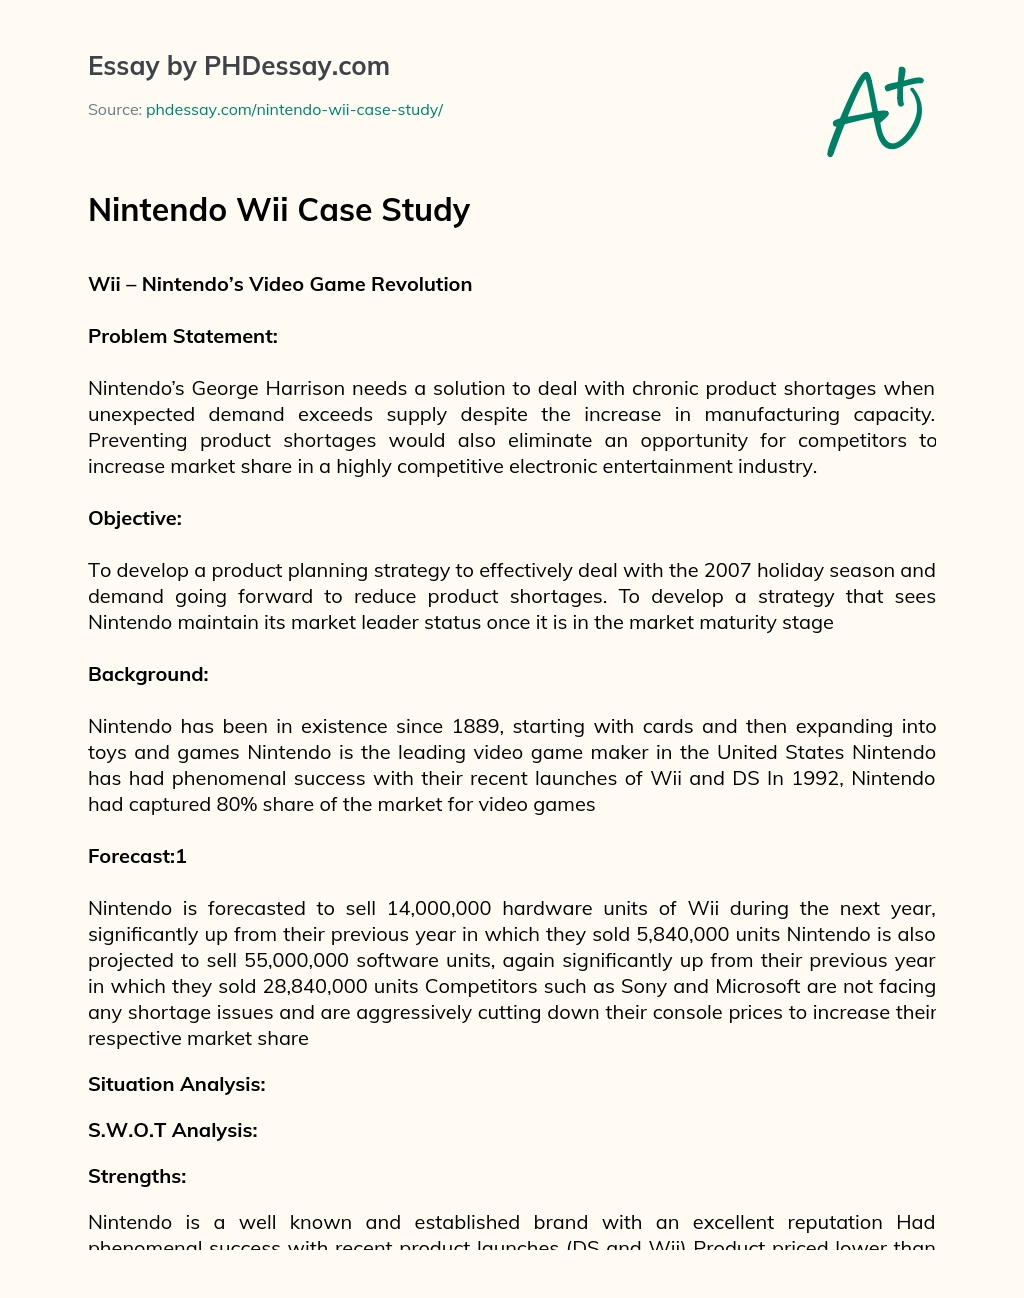 Nintendo Wii Case Study essay